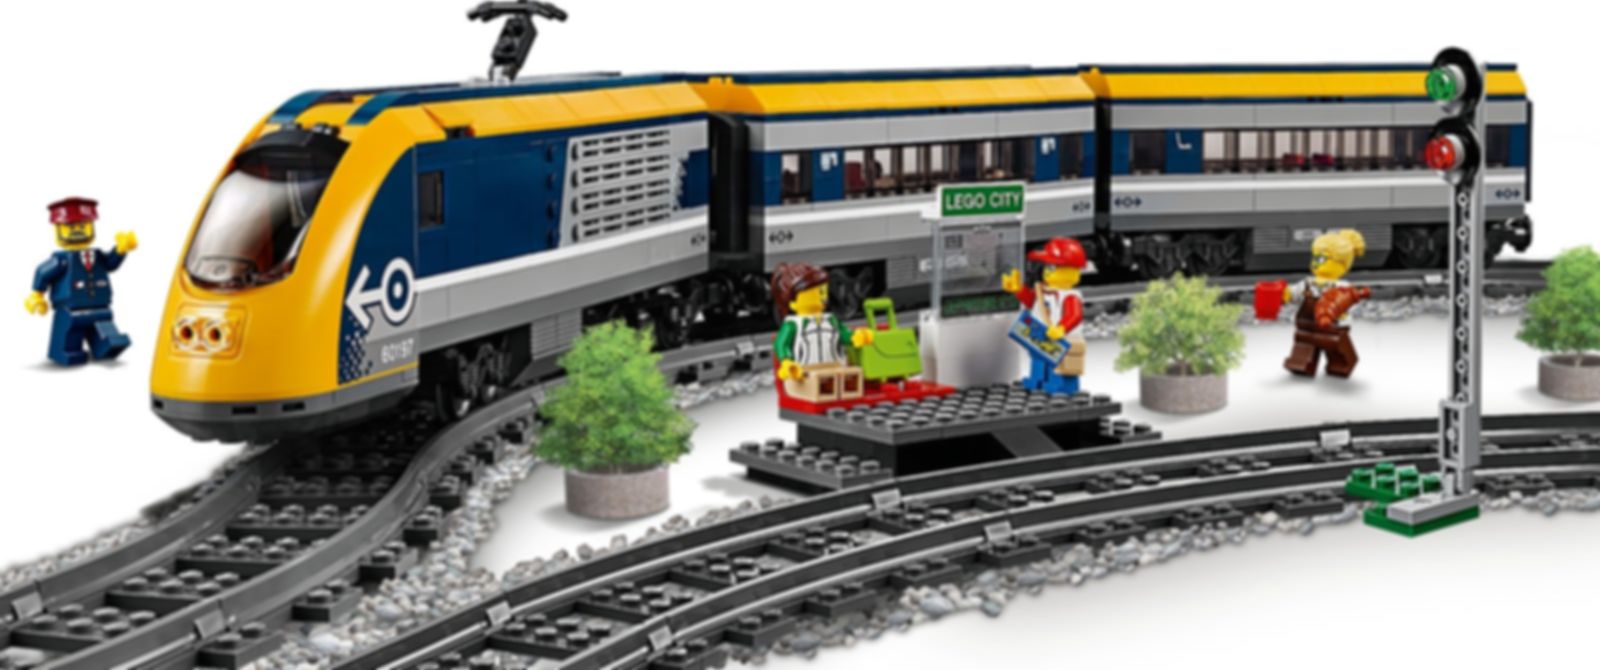 LEGO® City Passenger Train gameplay